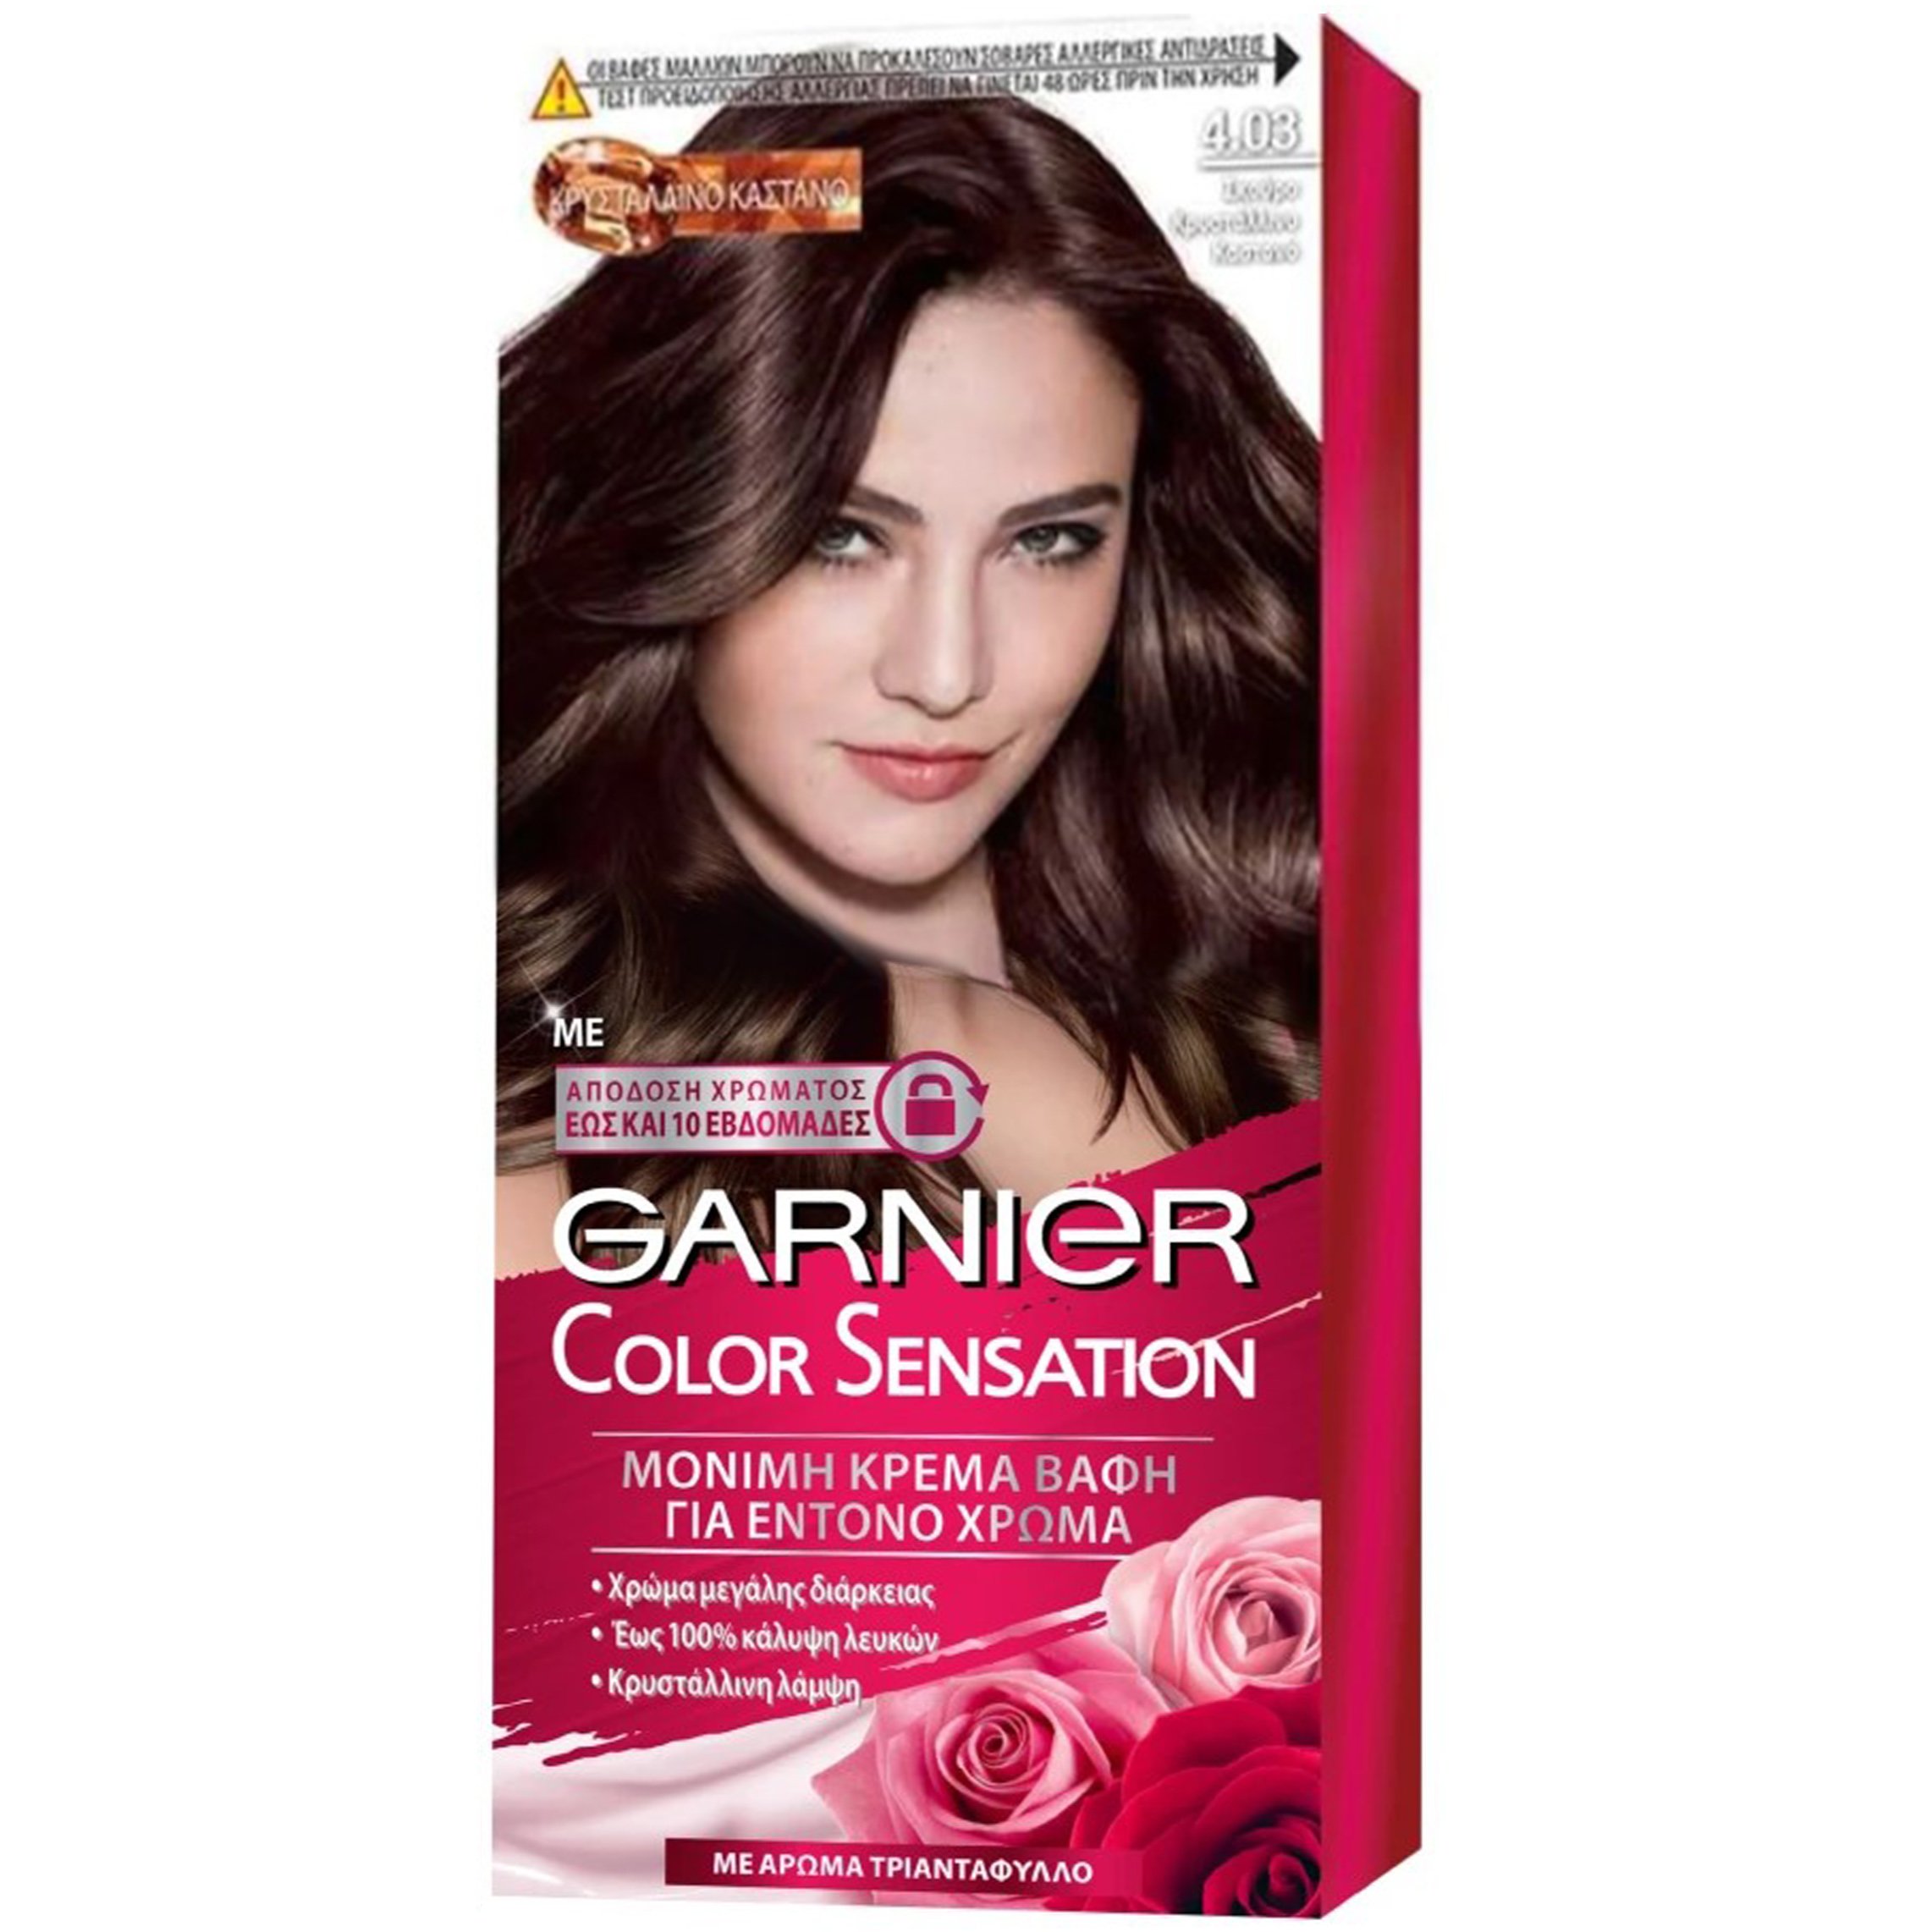 Garnier Color Sensation Permanent Hair Color Kit Μόνιμη Κρέμα Βαφή Μαλλιών με Άρωμα Τριαντάφυλλο 1 Τεμάχιο – 4.03 Σκούρο Κρυστάλλινο Καστανό